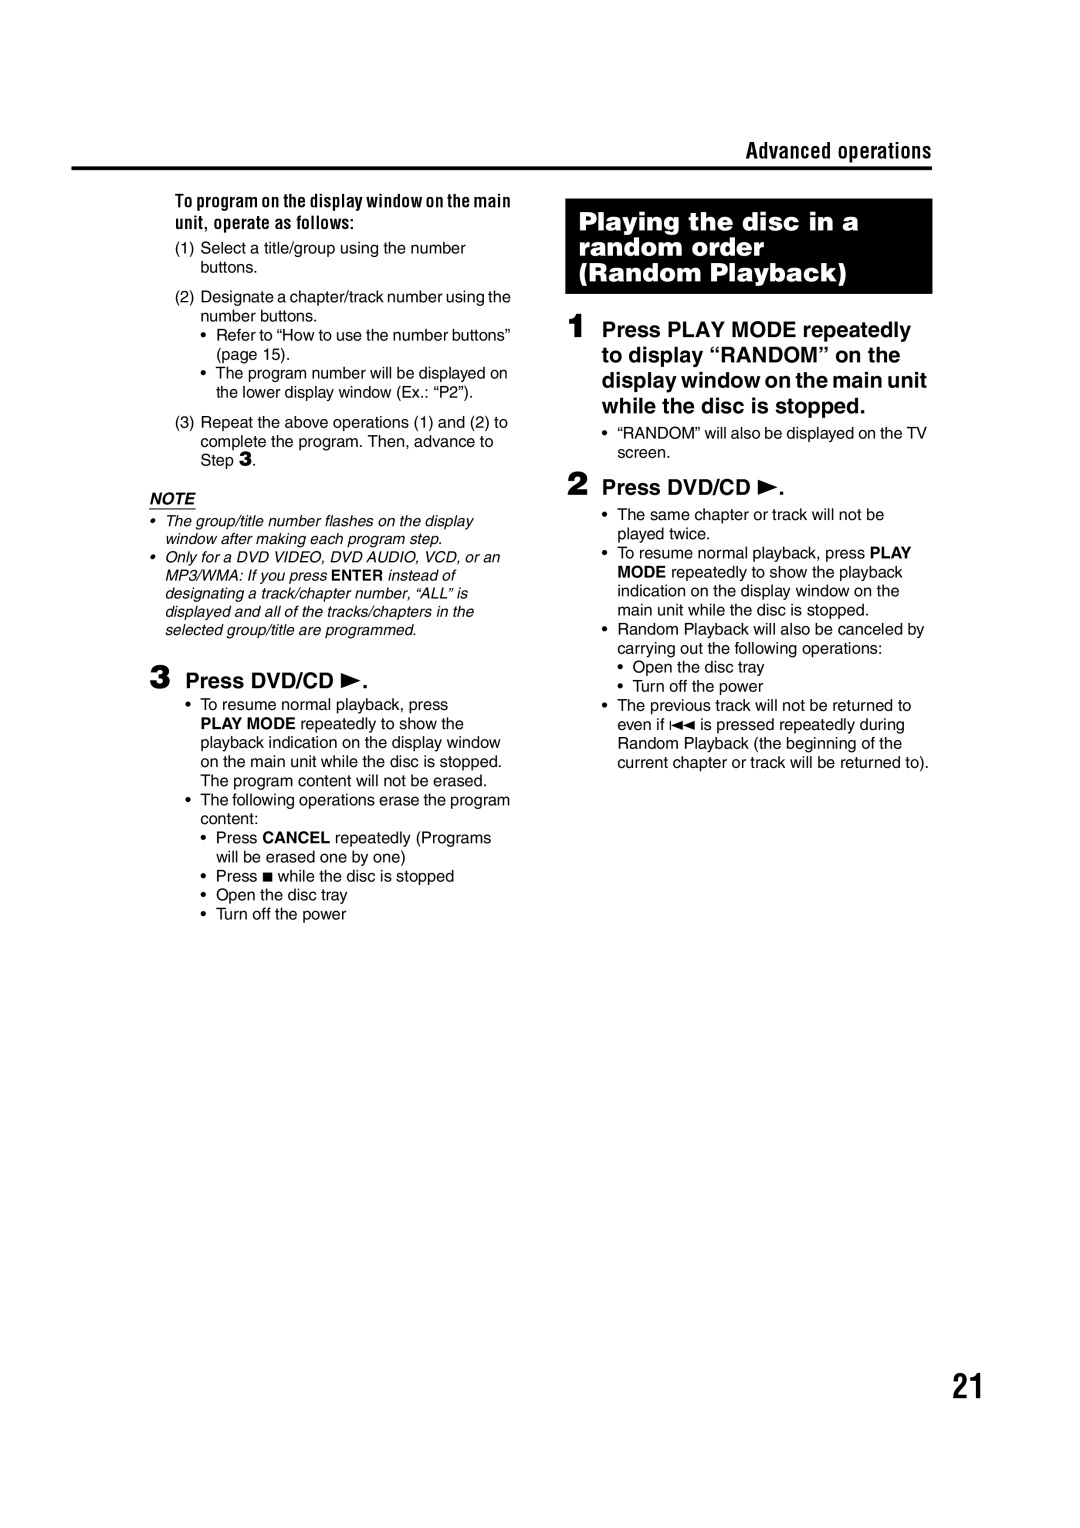 JVC GVT0144-005A manual Press DVD/CD, Advanced operations 